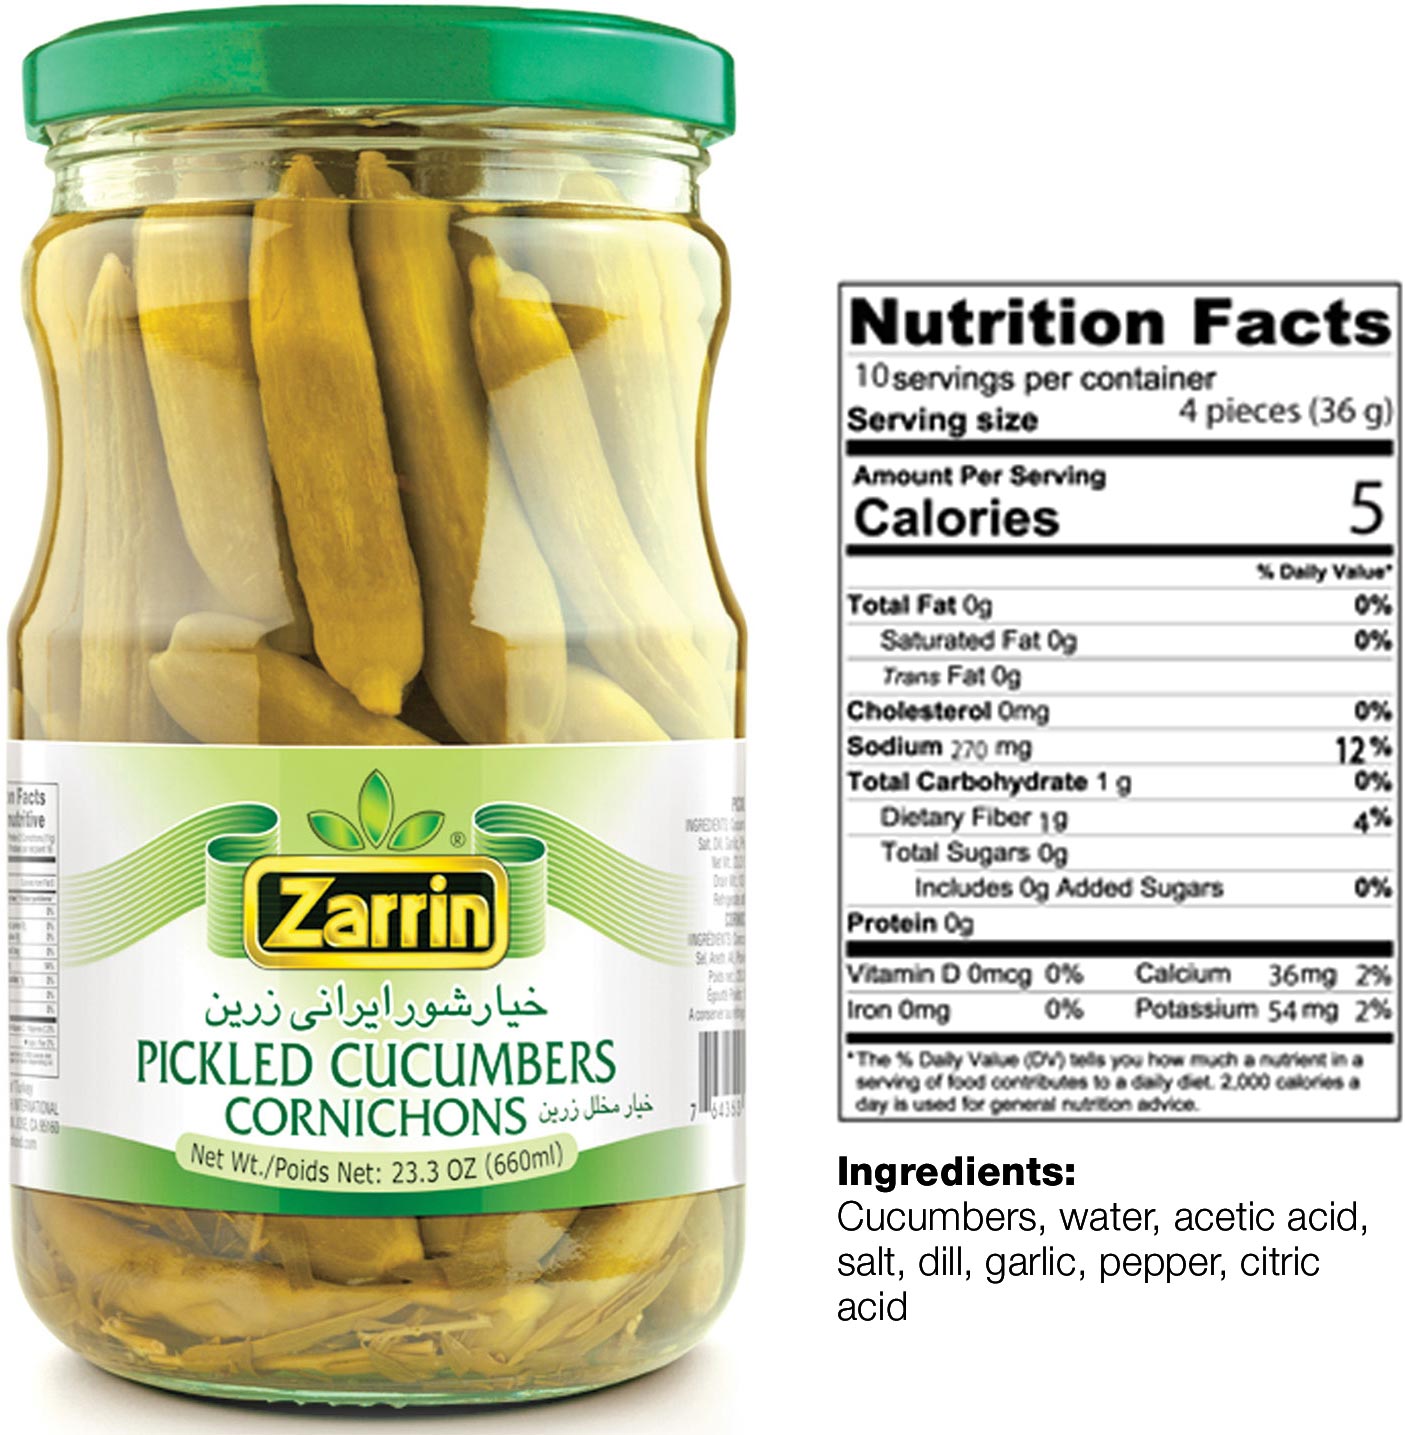 Pickled Cucumbers In Glass Jar by Zarrin. 23.3oz.